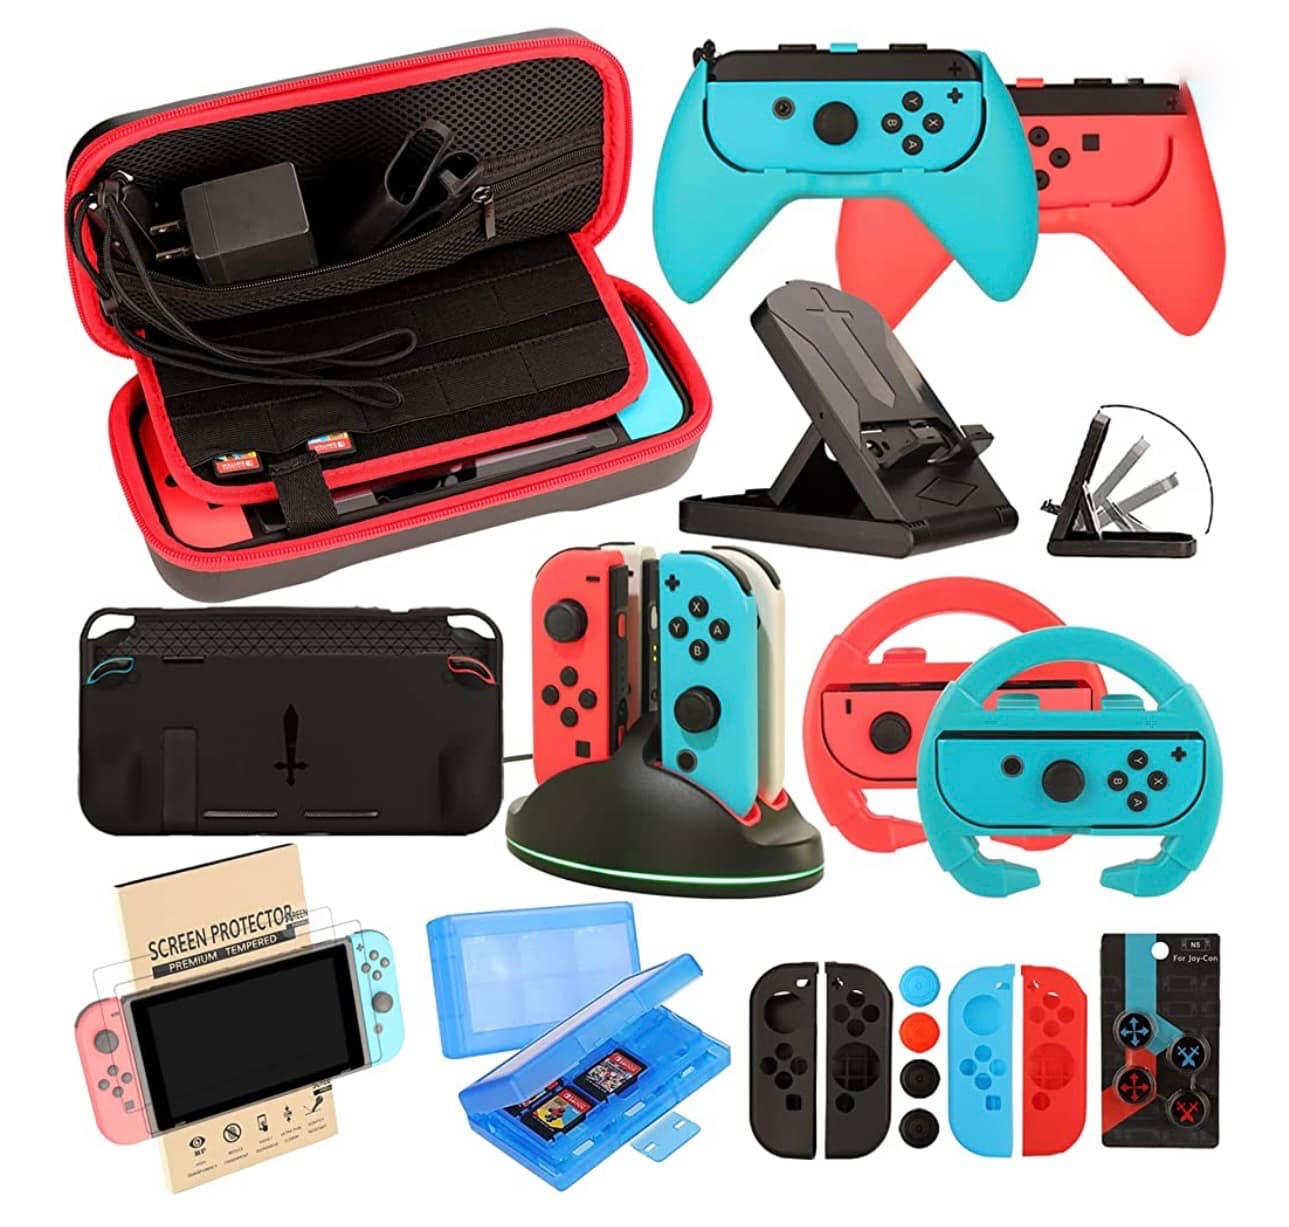 EOVOLA Nintendo Switch accessories kit.